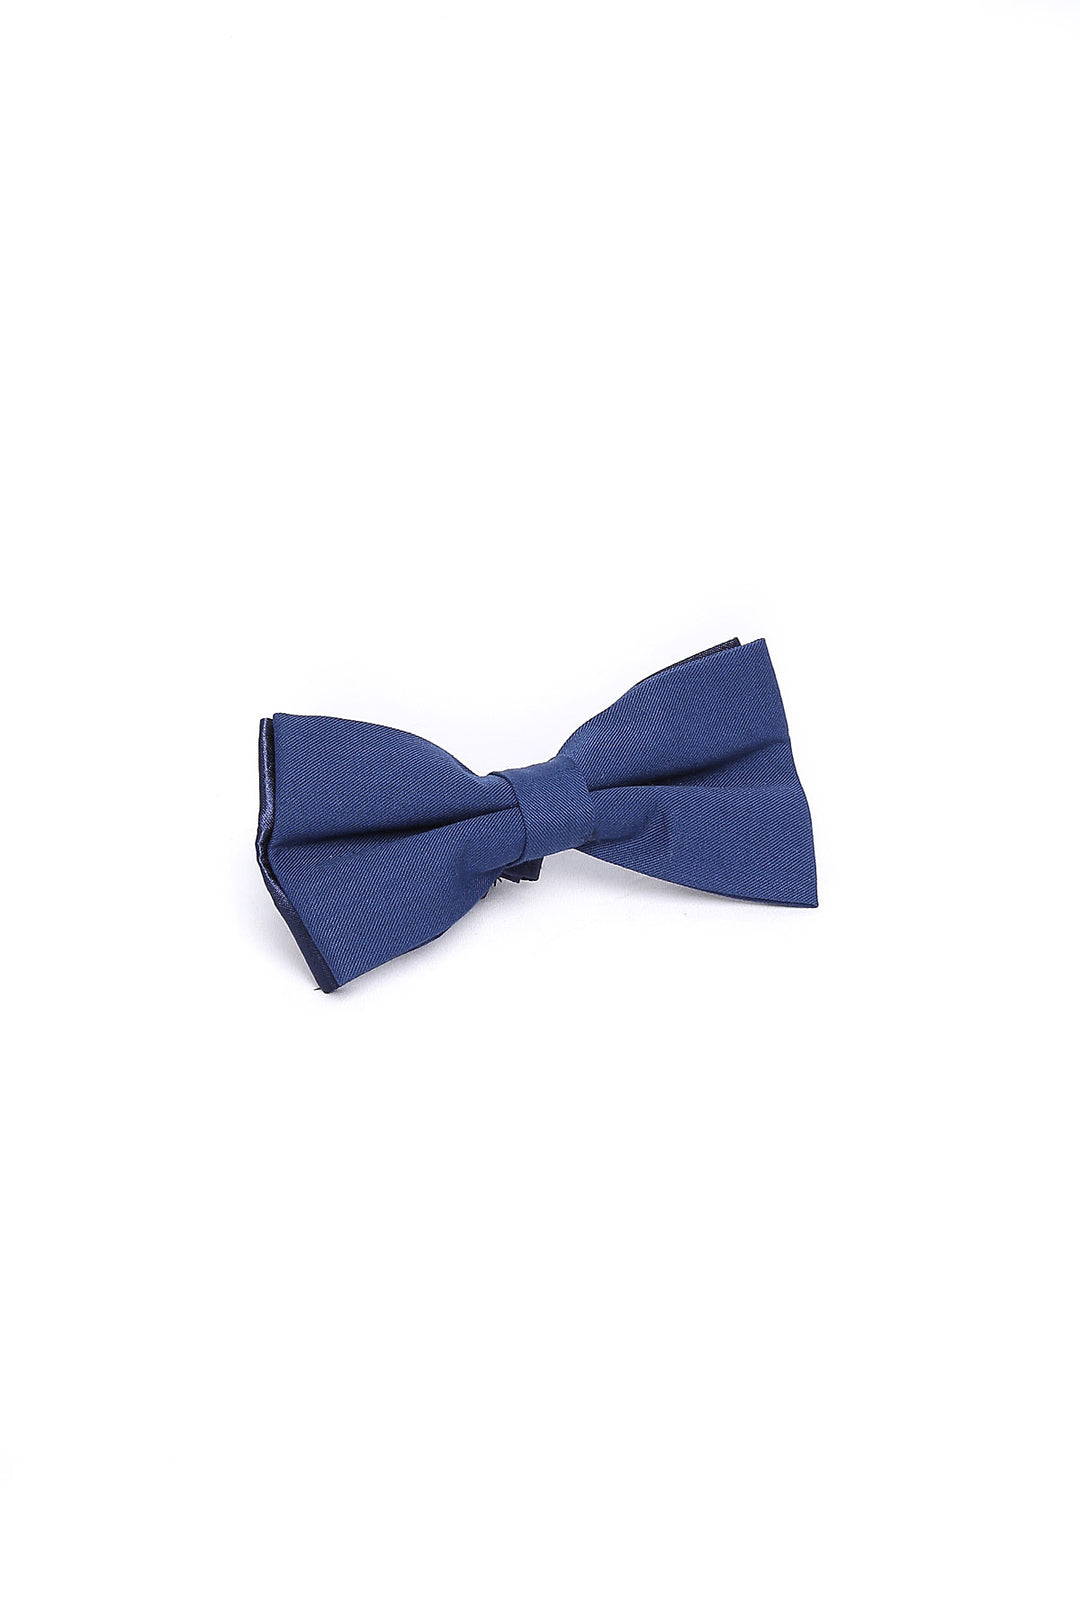 Classic Navy Blue Men Bow Tie - Wessi